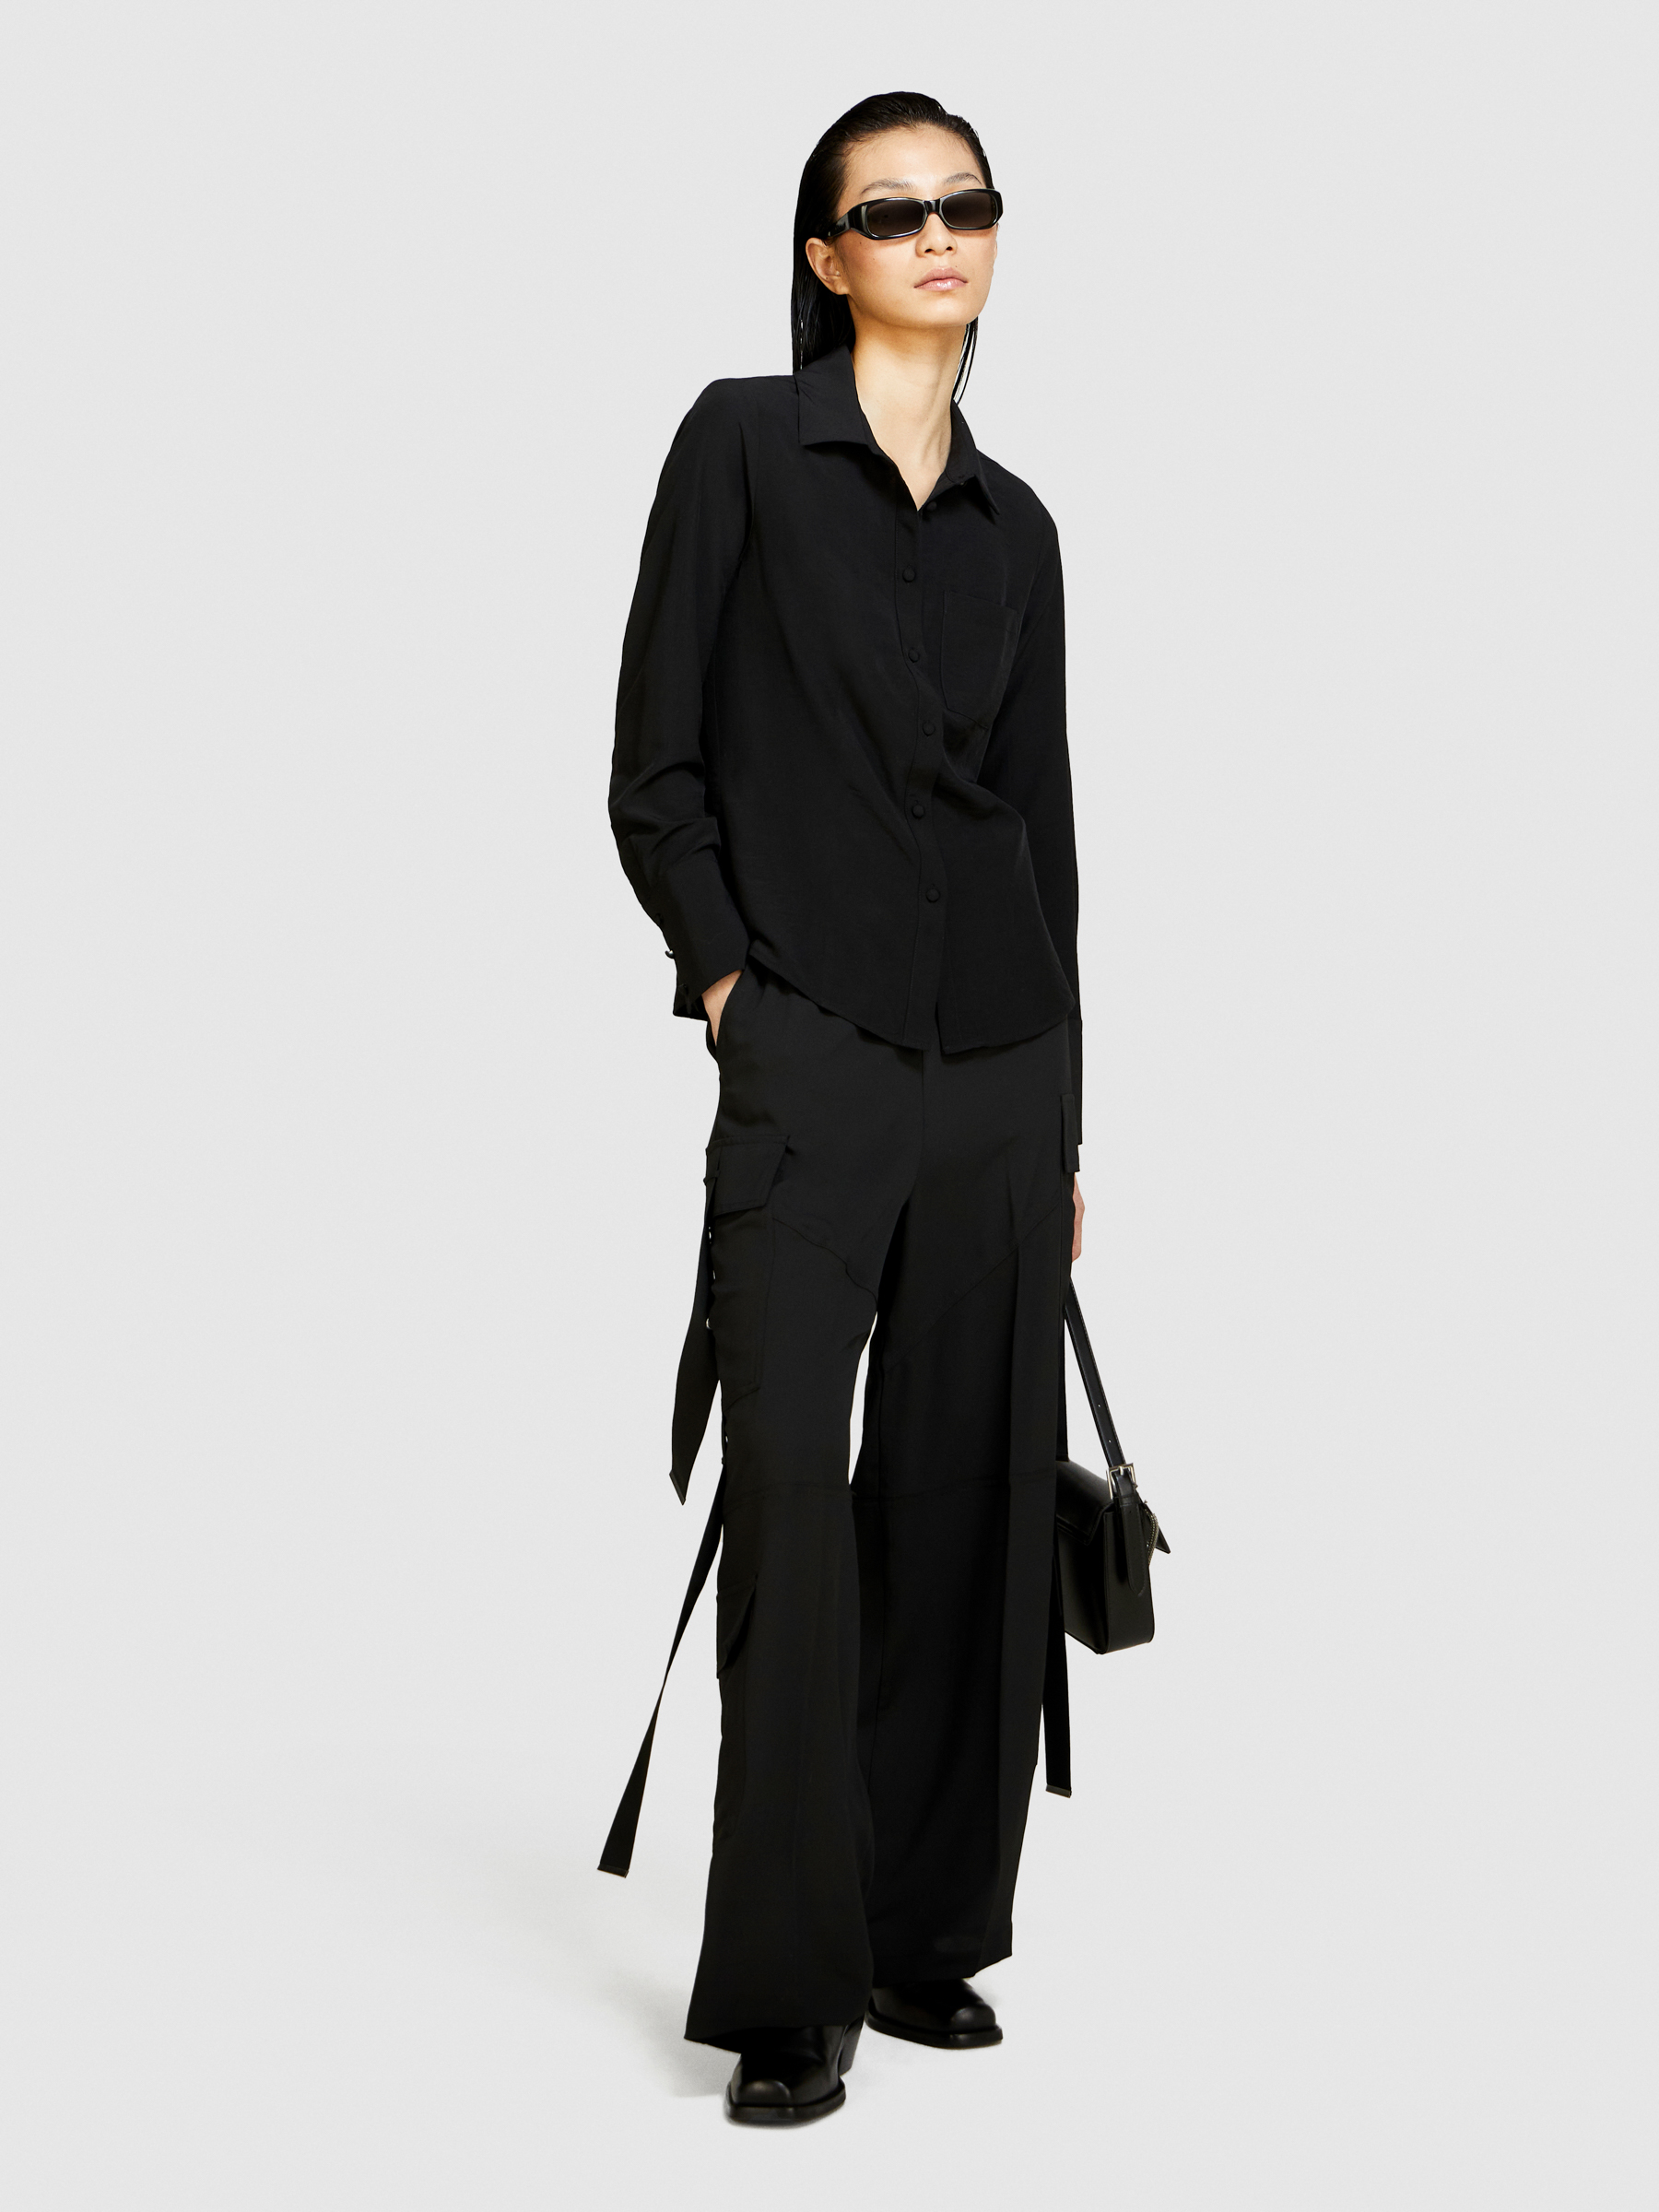 Sisley - Mixed Fabric Shirt, Woman, Black, Size: S